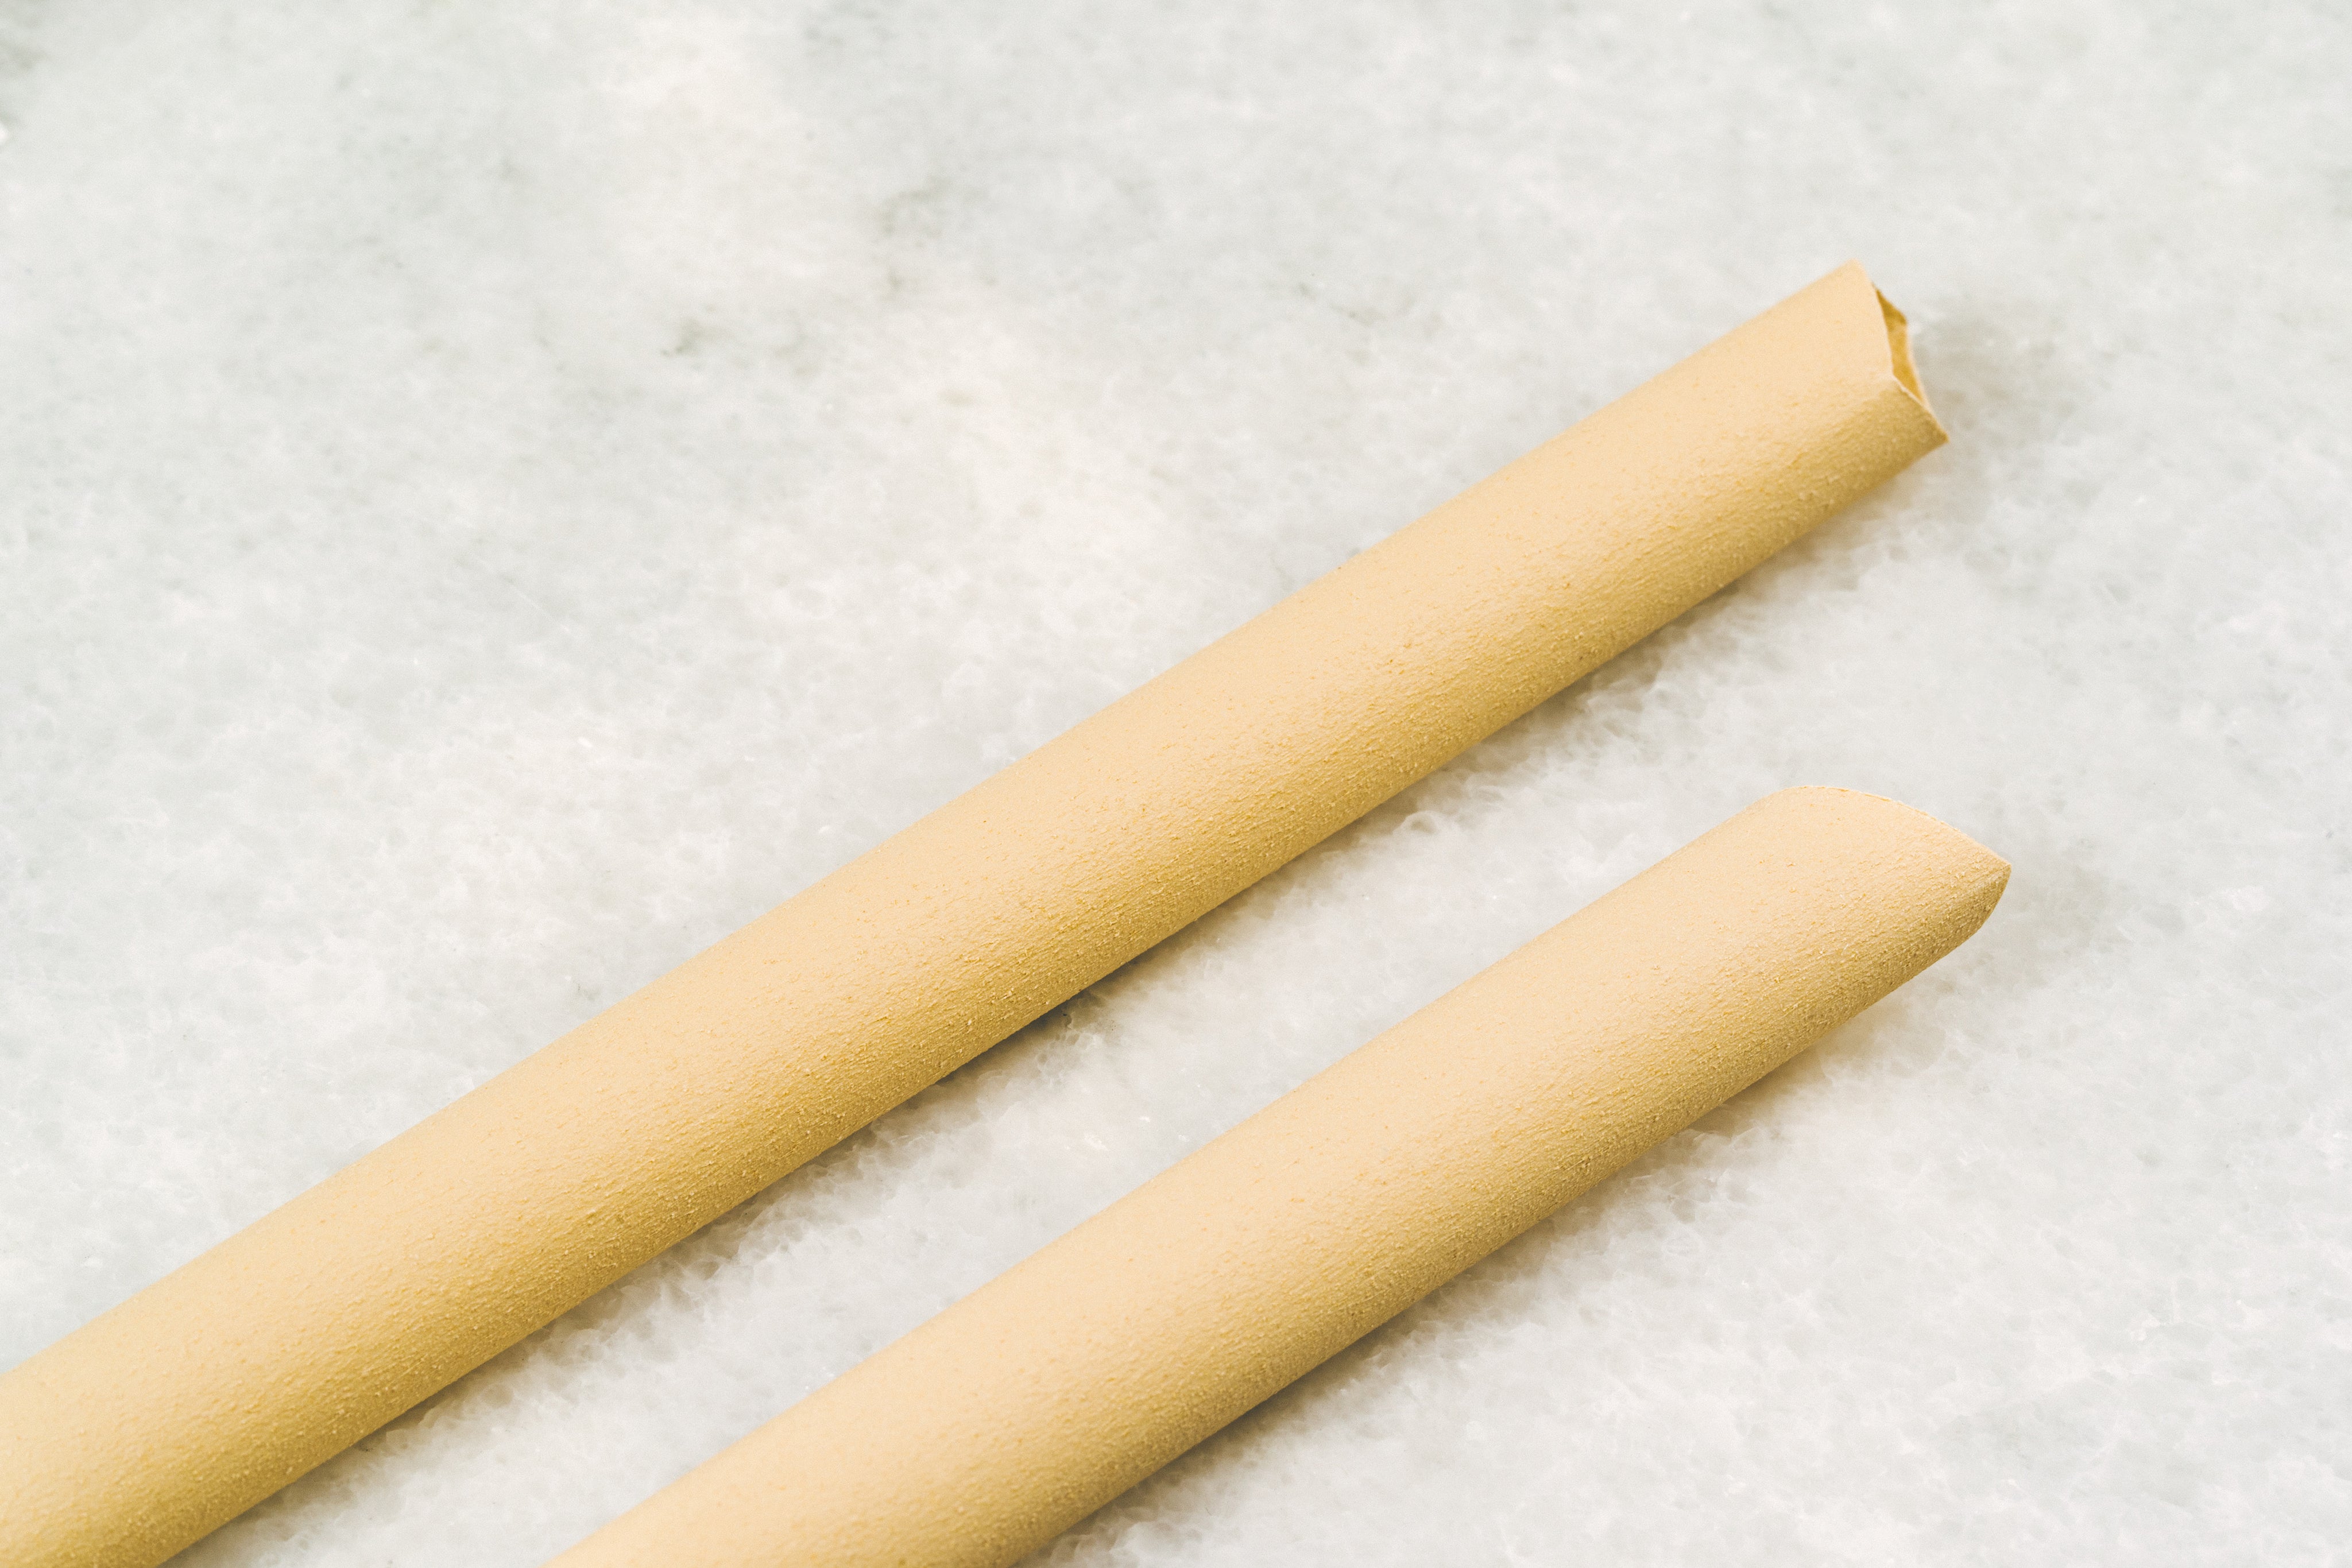 Karat Earth 9 Diagonal Cut Bamboo Fiber Colossal Straws (12mm) Paper Wrappep, Natural - Bag of 80 Pcs